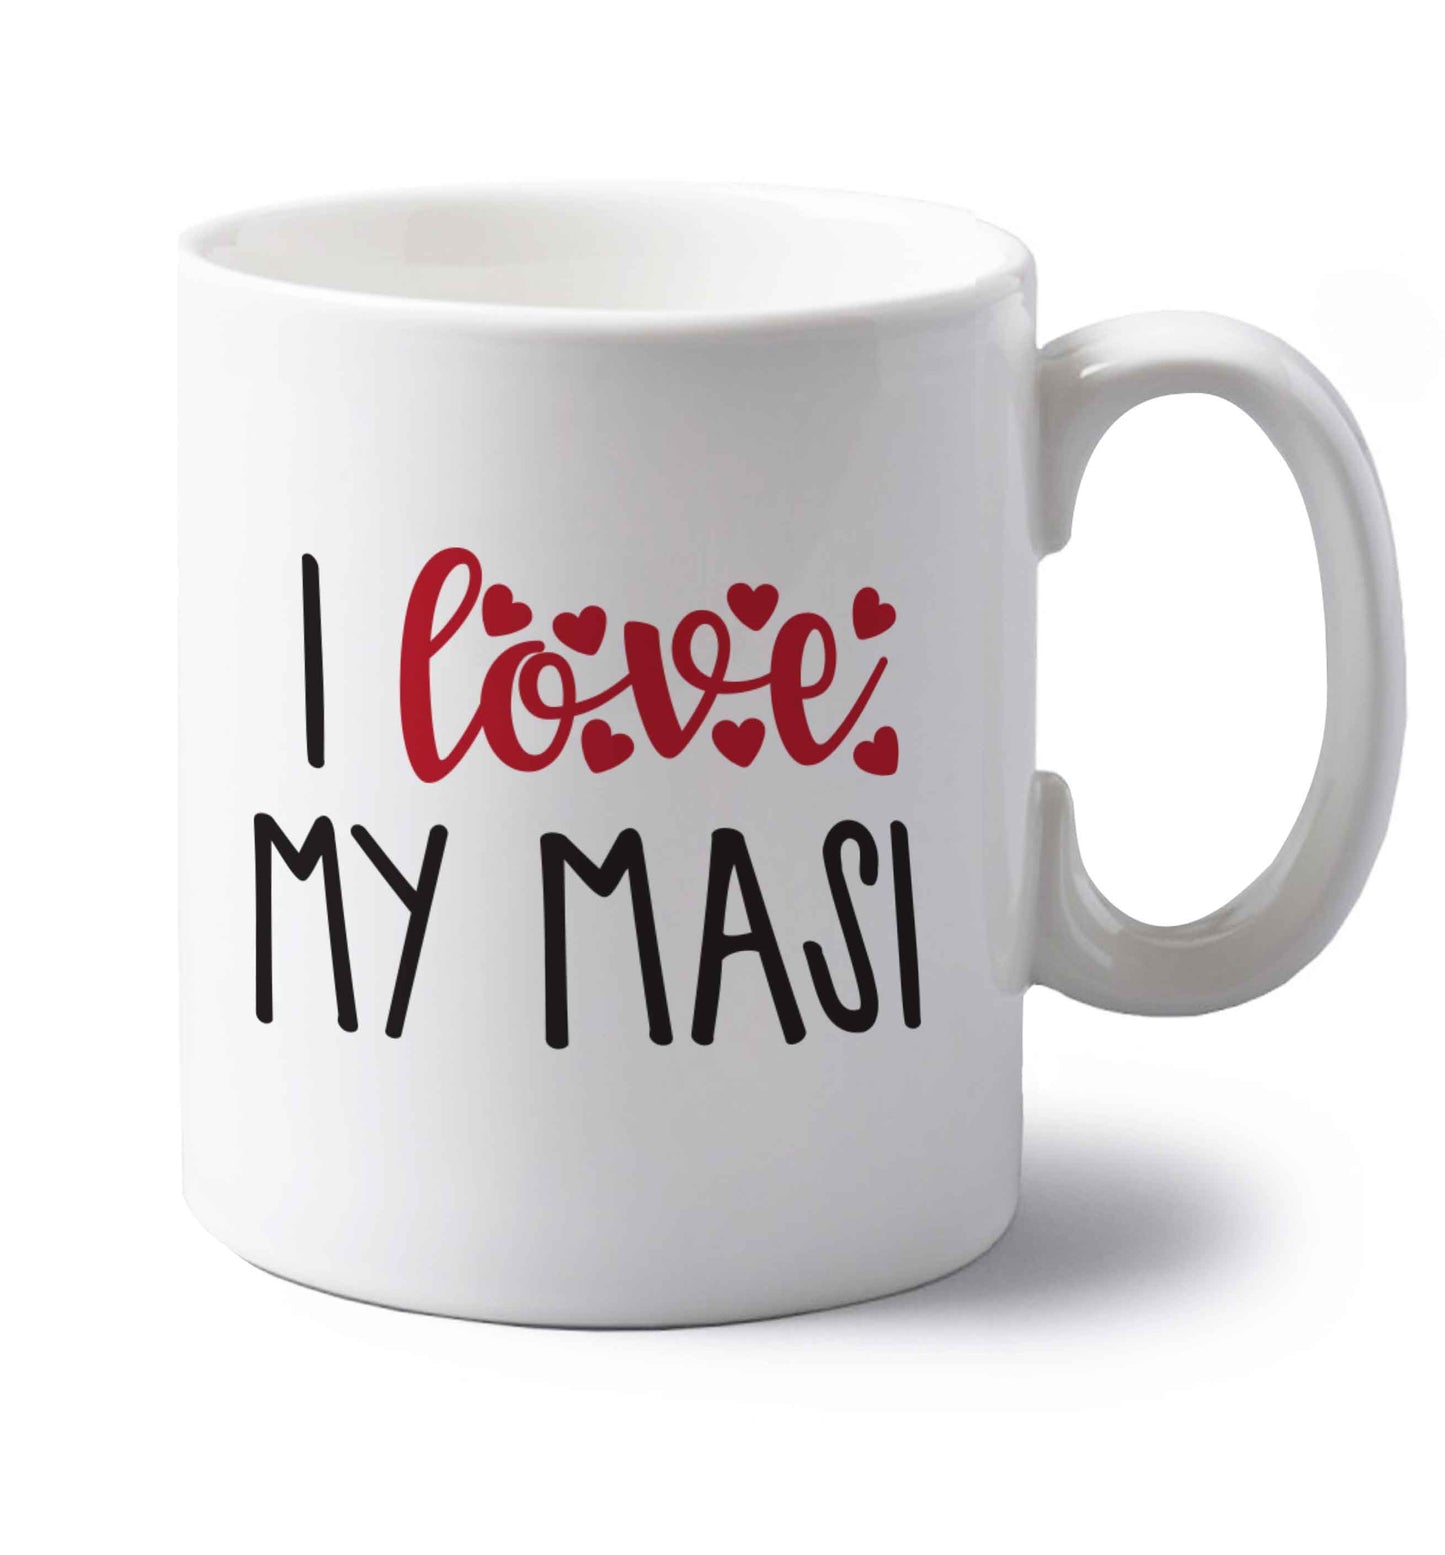 I love my masi left handed white ceramic mug 